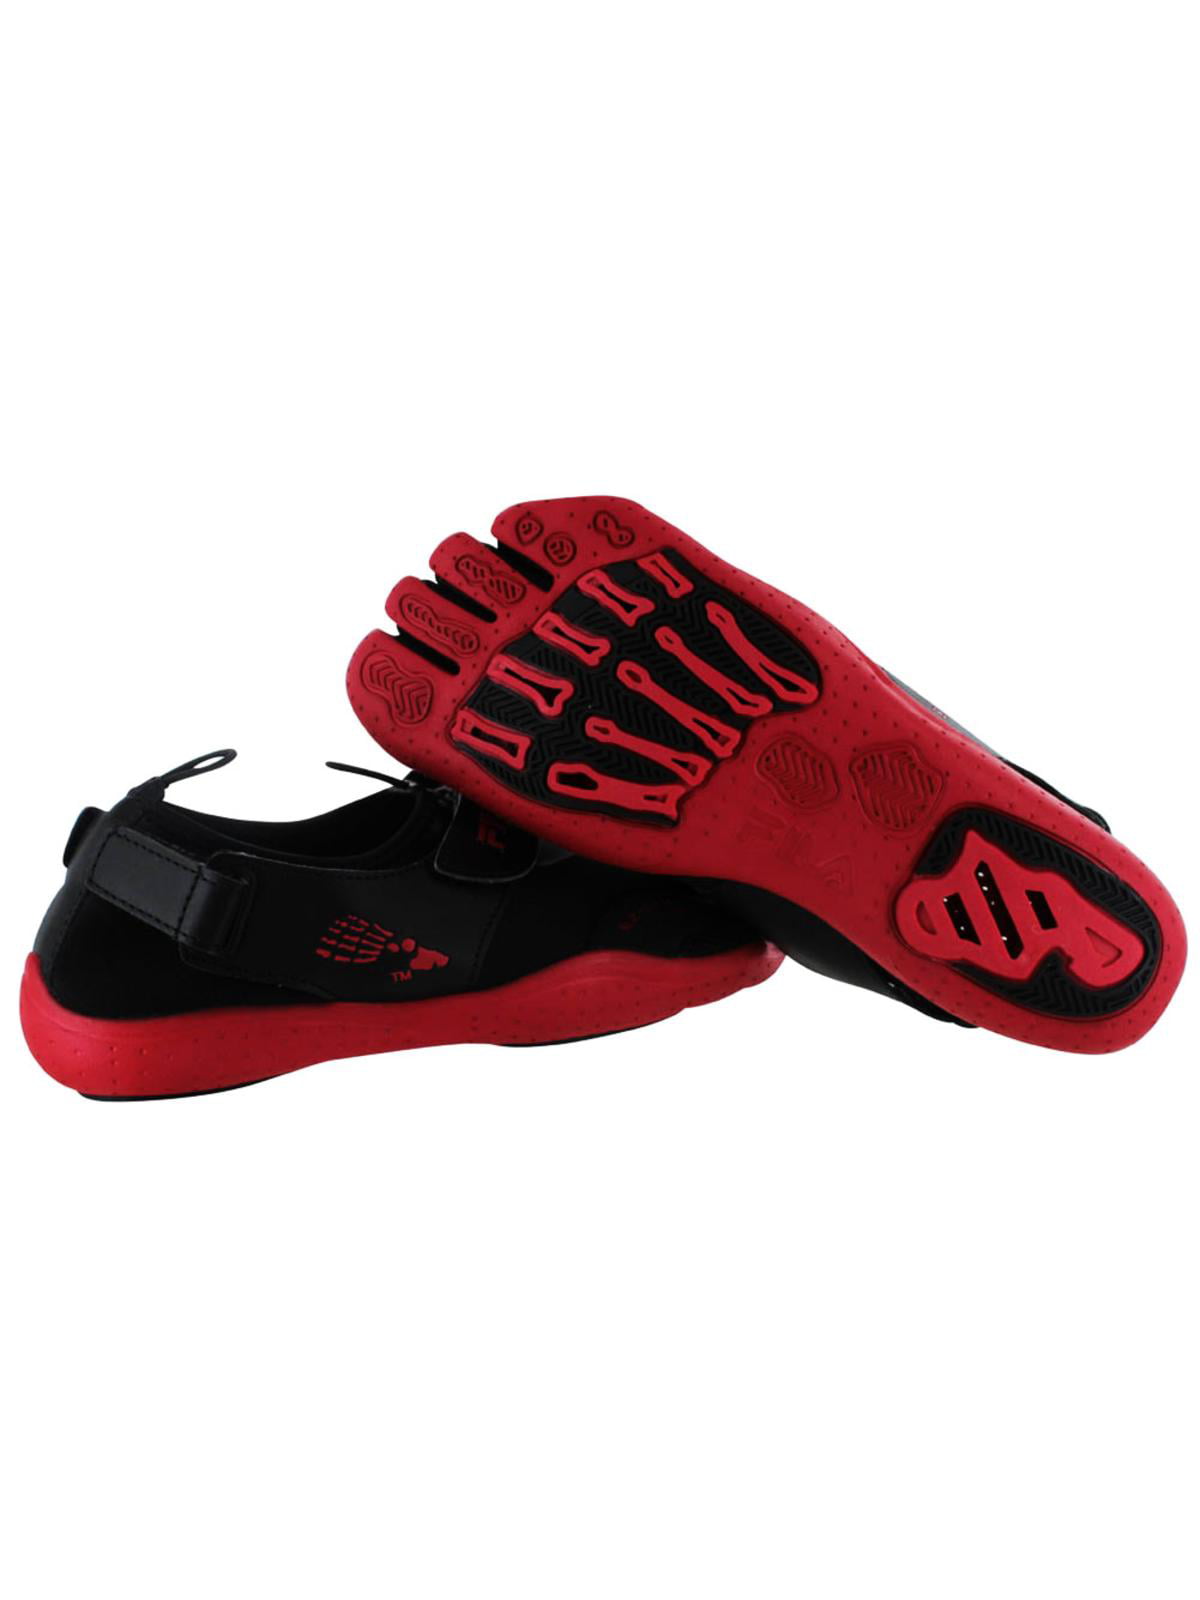 Skele-toes Slide Drainage Swim Shoes Fila | xn--90absbknhbvge.xn--p1ai:443